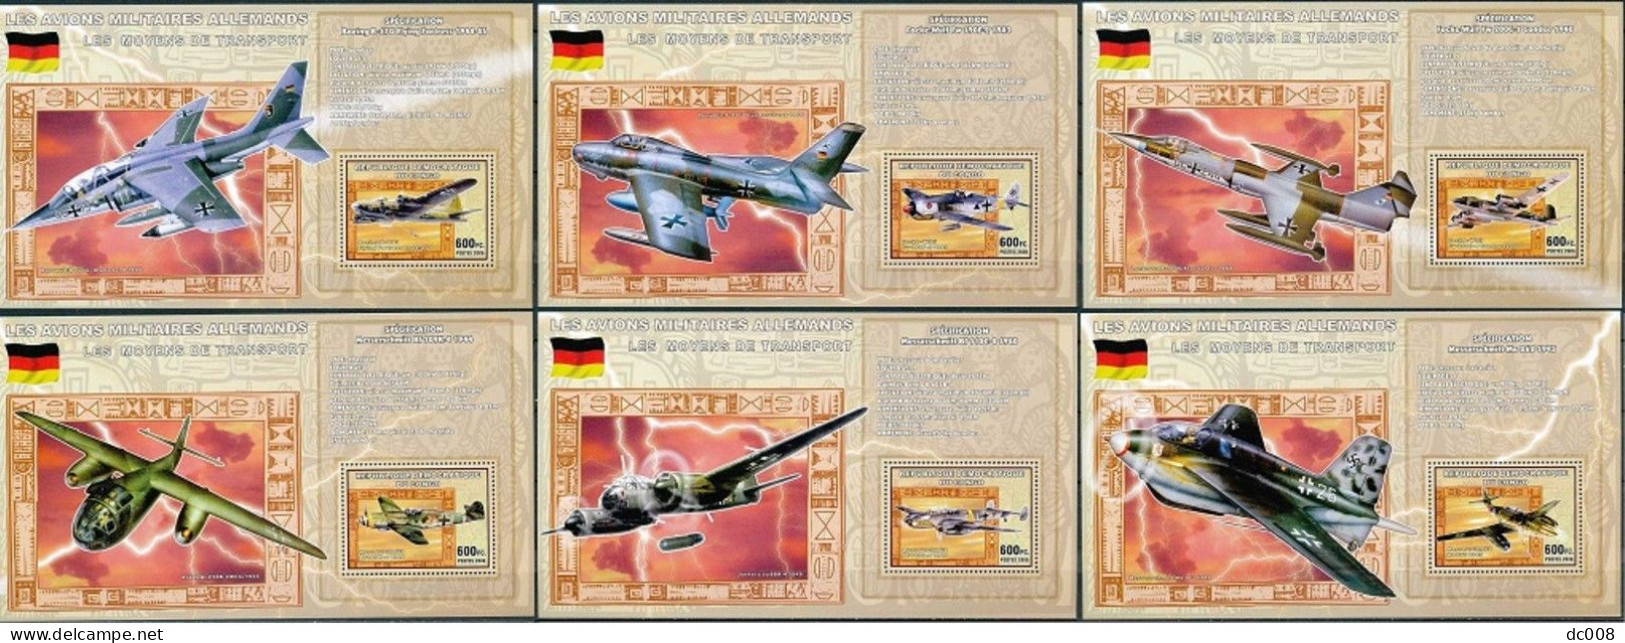 2006 Les Avions Militaires Allemands - Complet-volledig 7 Blocs - Ongebruikt